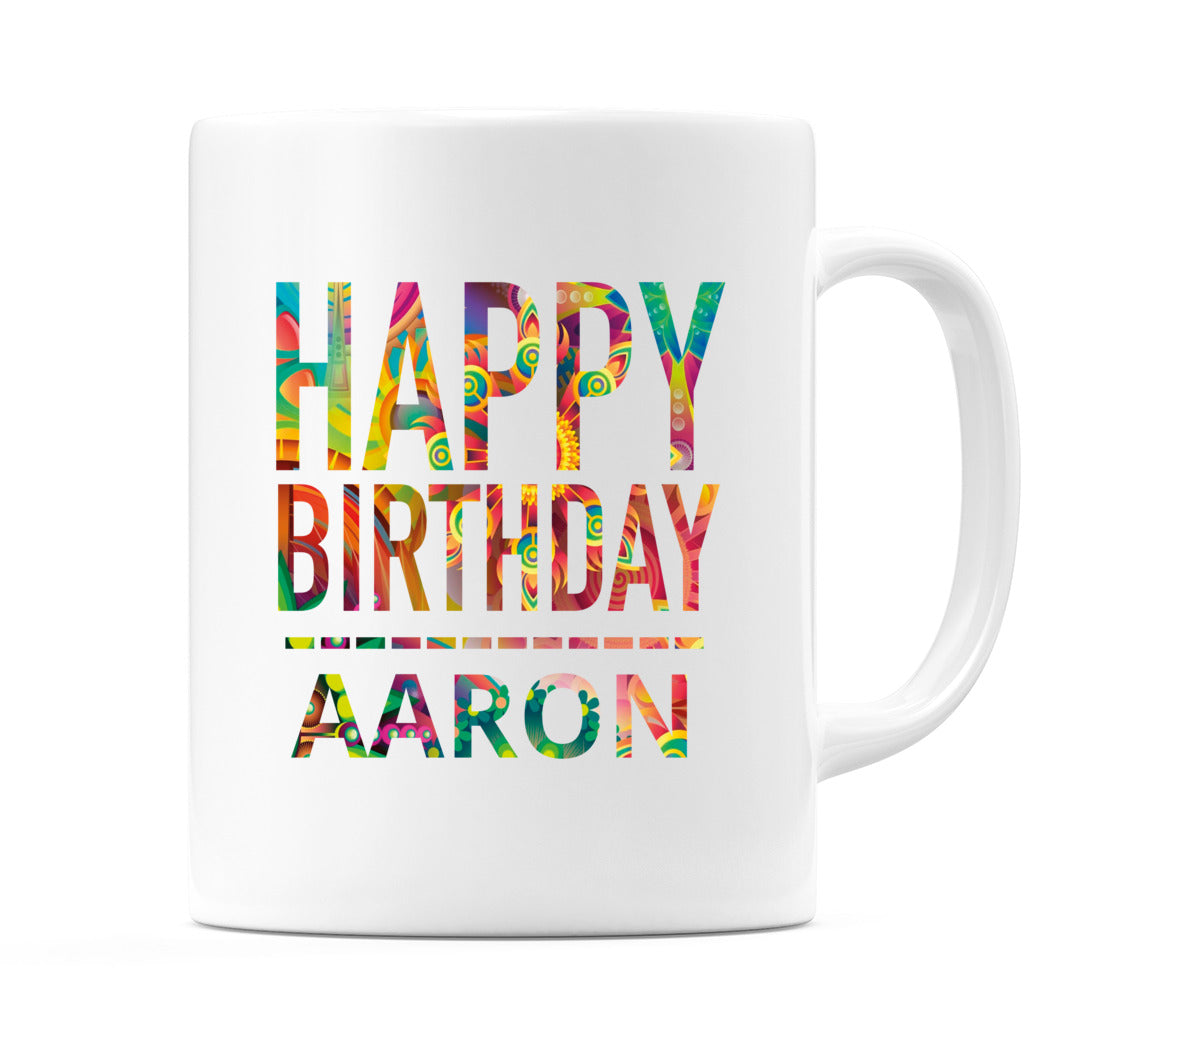 Happy Birthday Aaron (Tie Dye Effect) Mug Cup by WeDoMugs